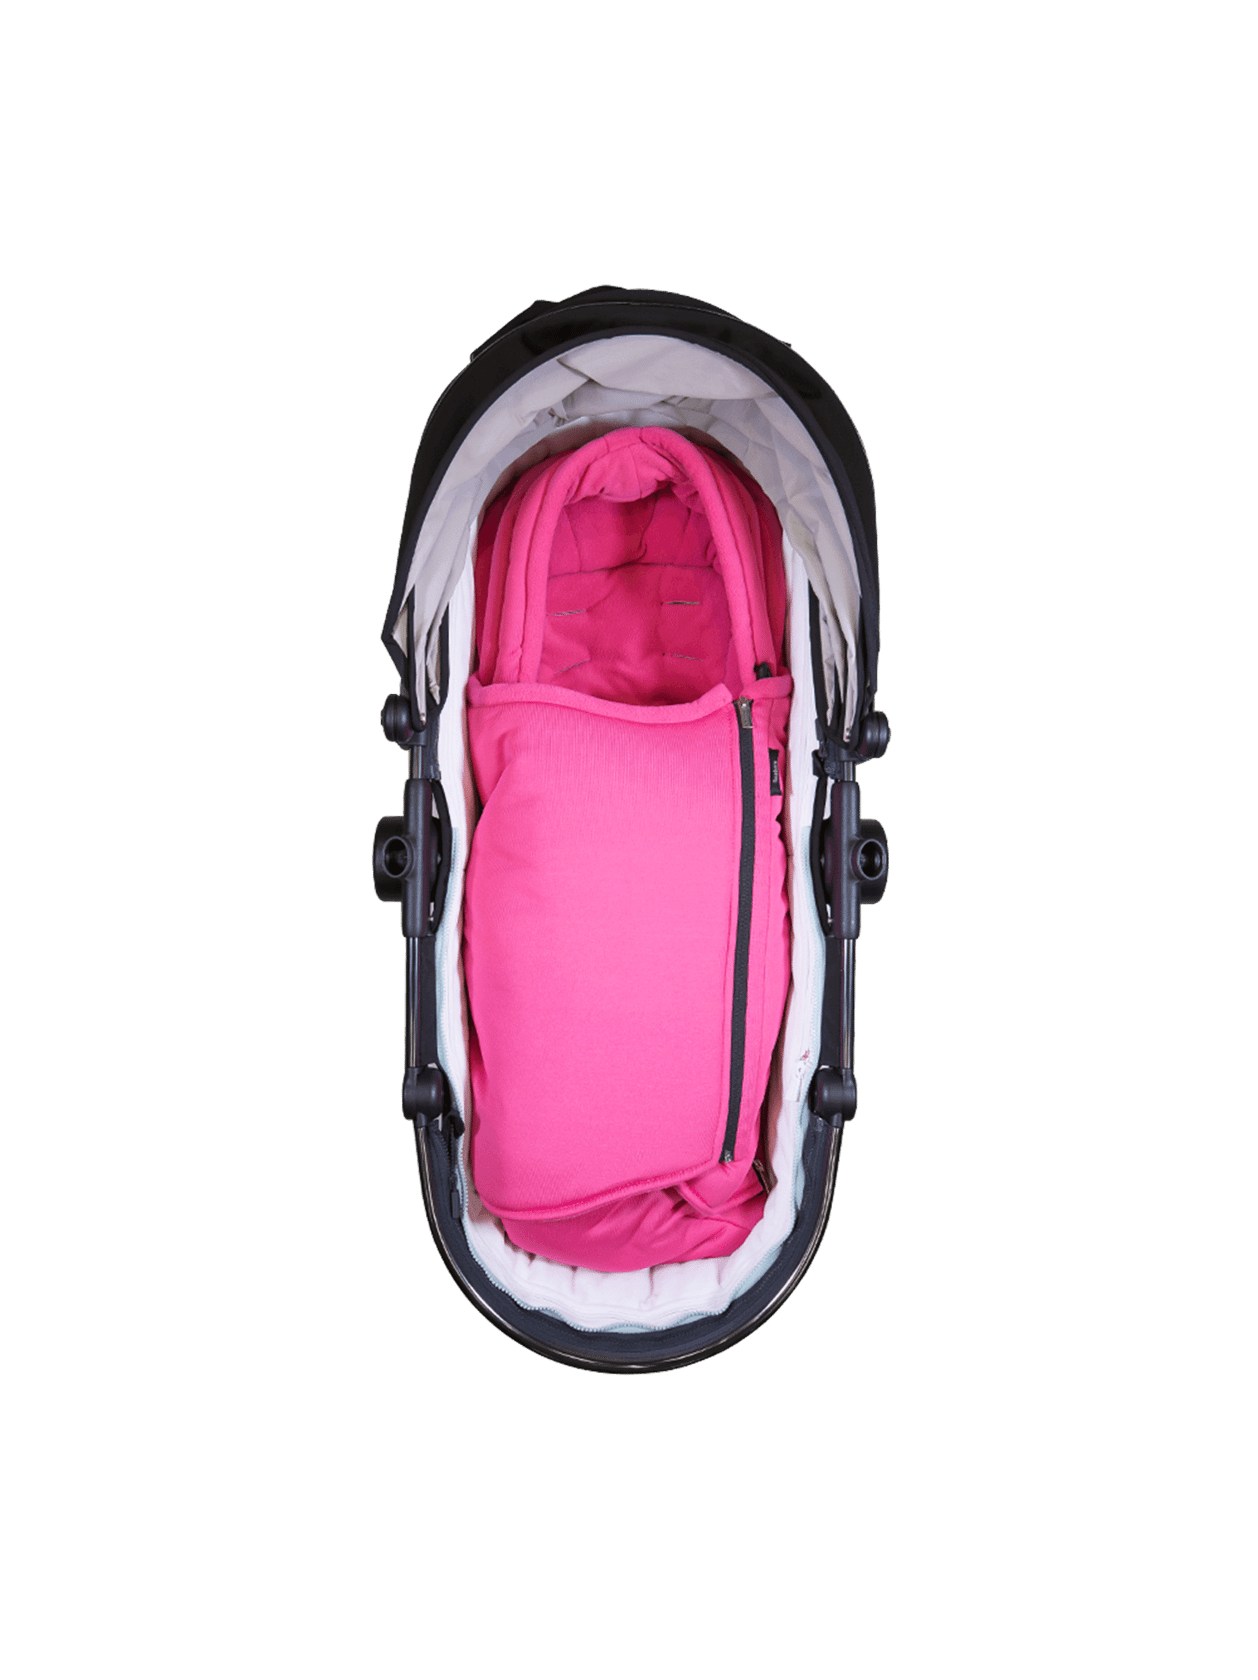 Newborn Pod for iCandy Peach Main Carrycot - Fuchsia